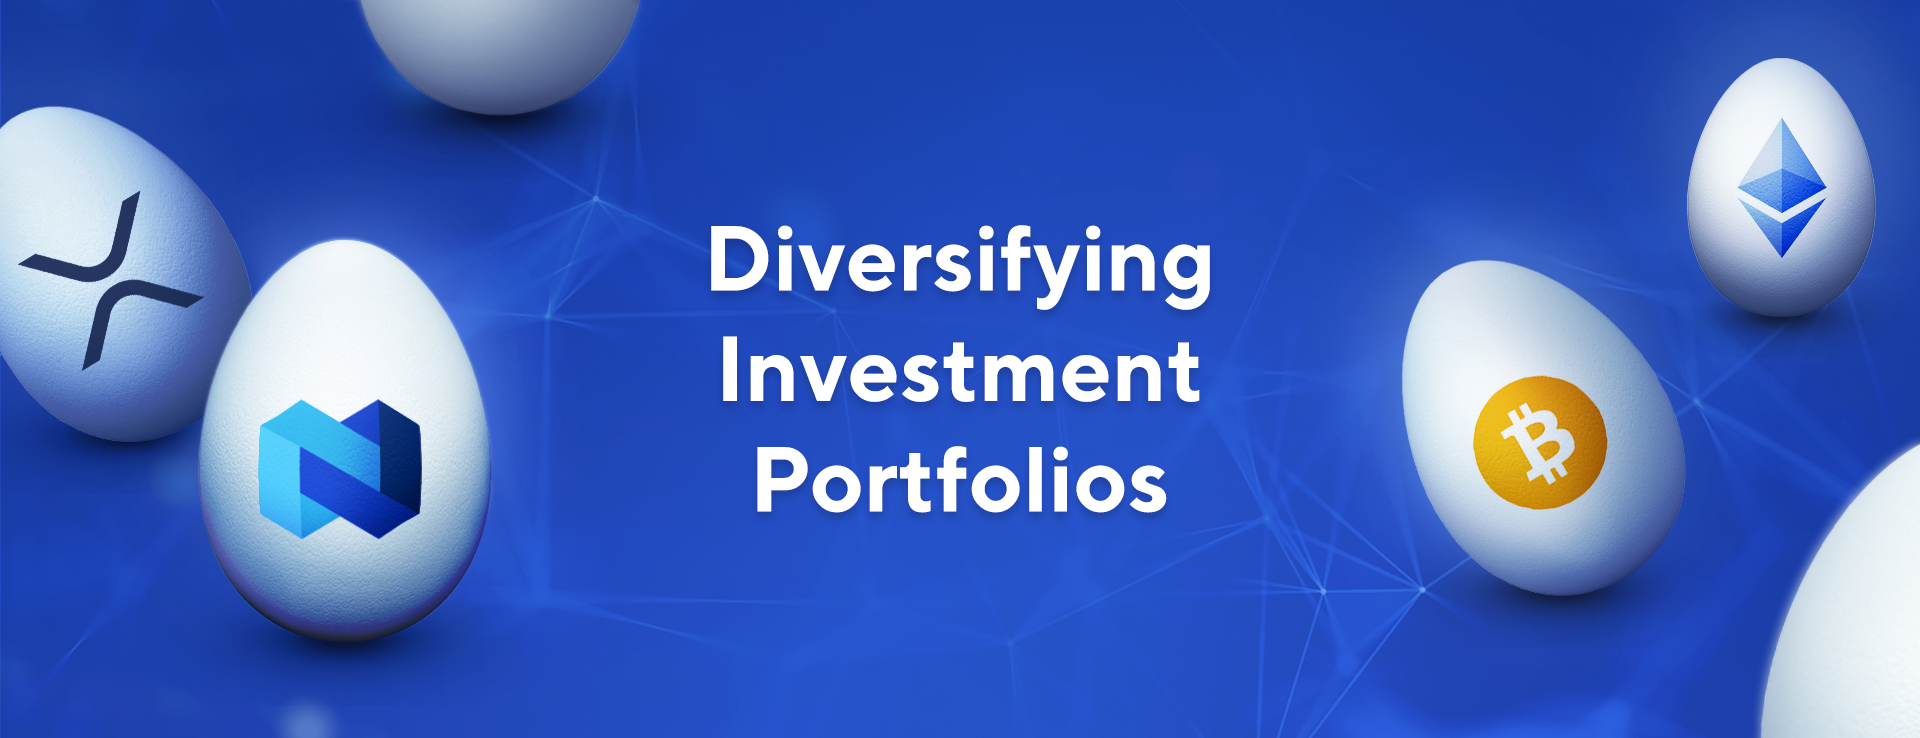 Diversification of Investment Portfolios with Nexo